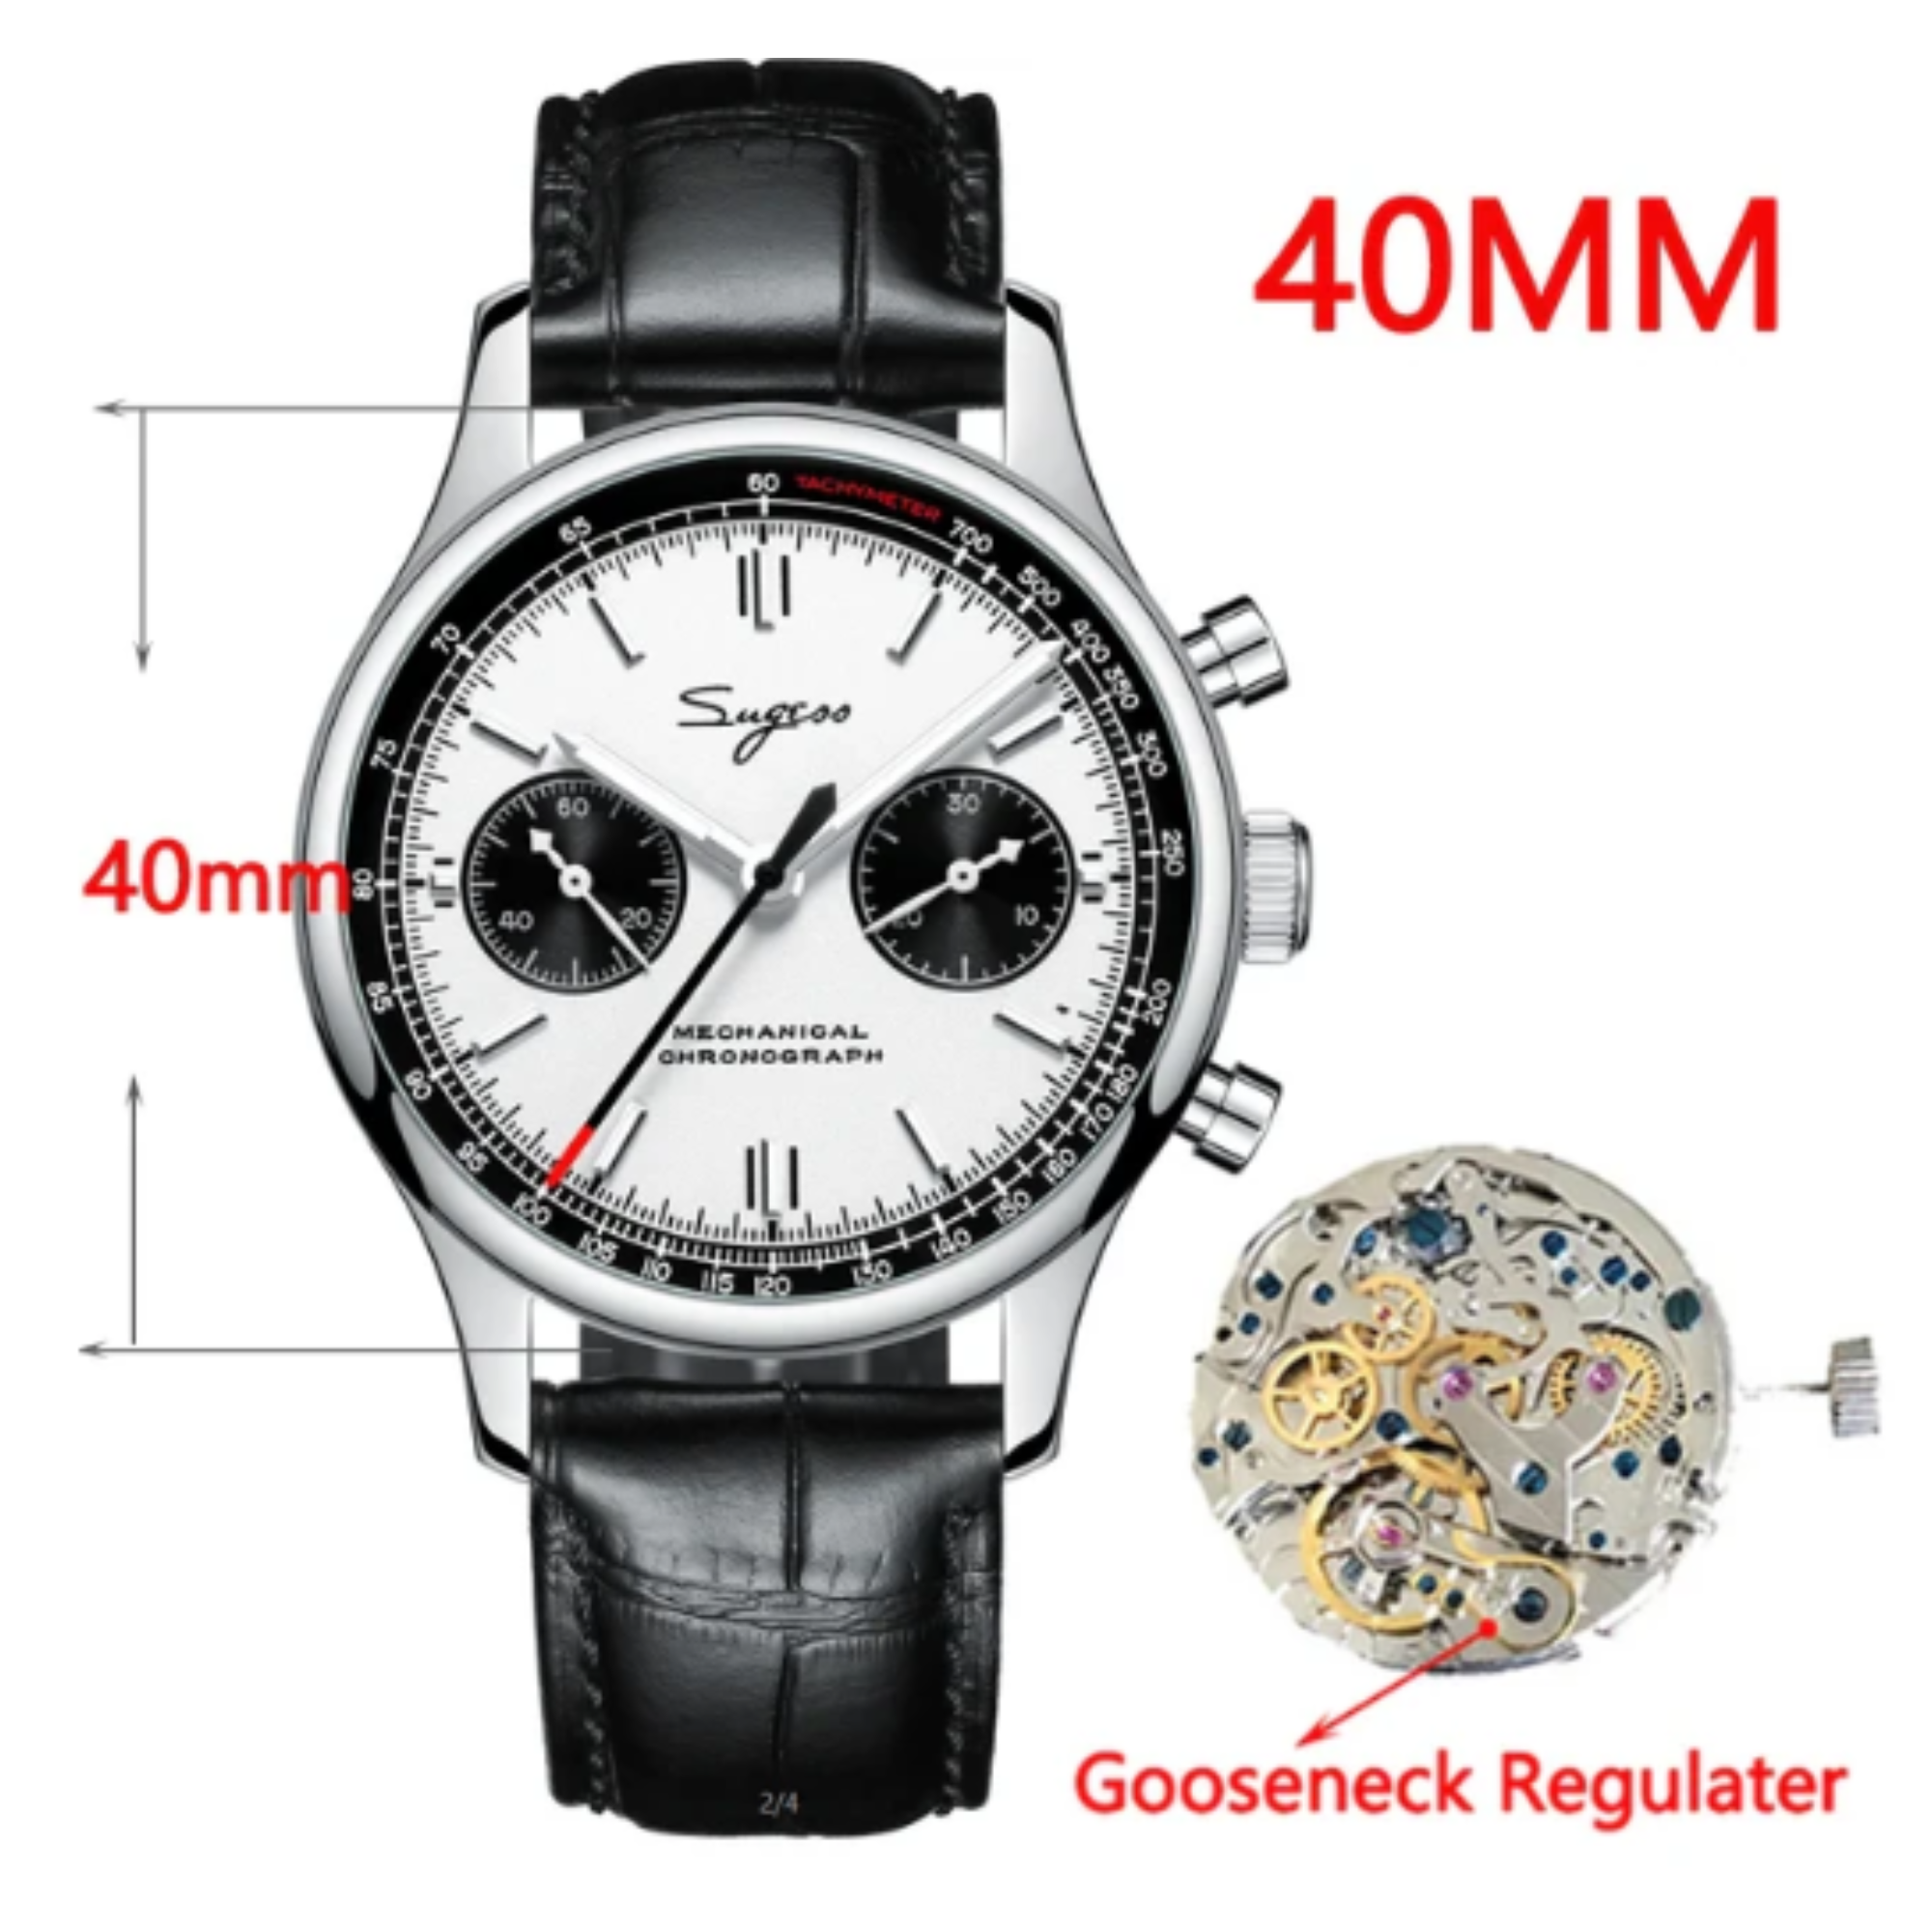 Sugess 40mm Pilot Chronograph with ST1901 Movement - Gooseneck Regulator Mens Watch